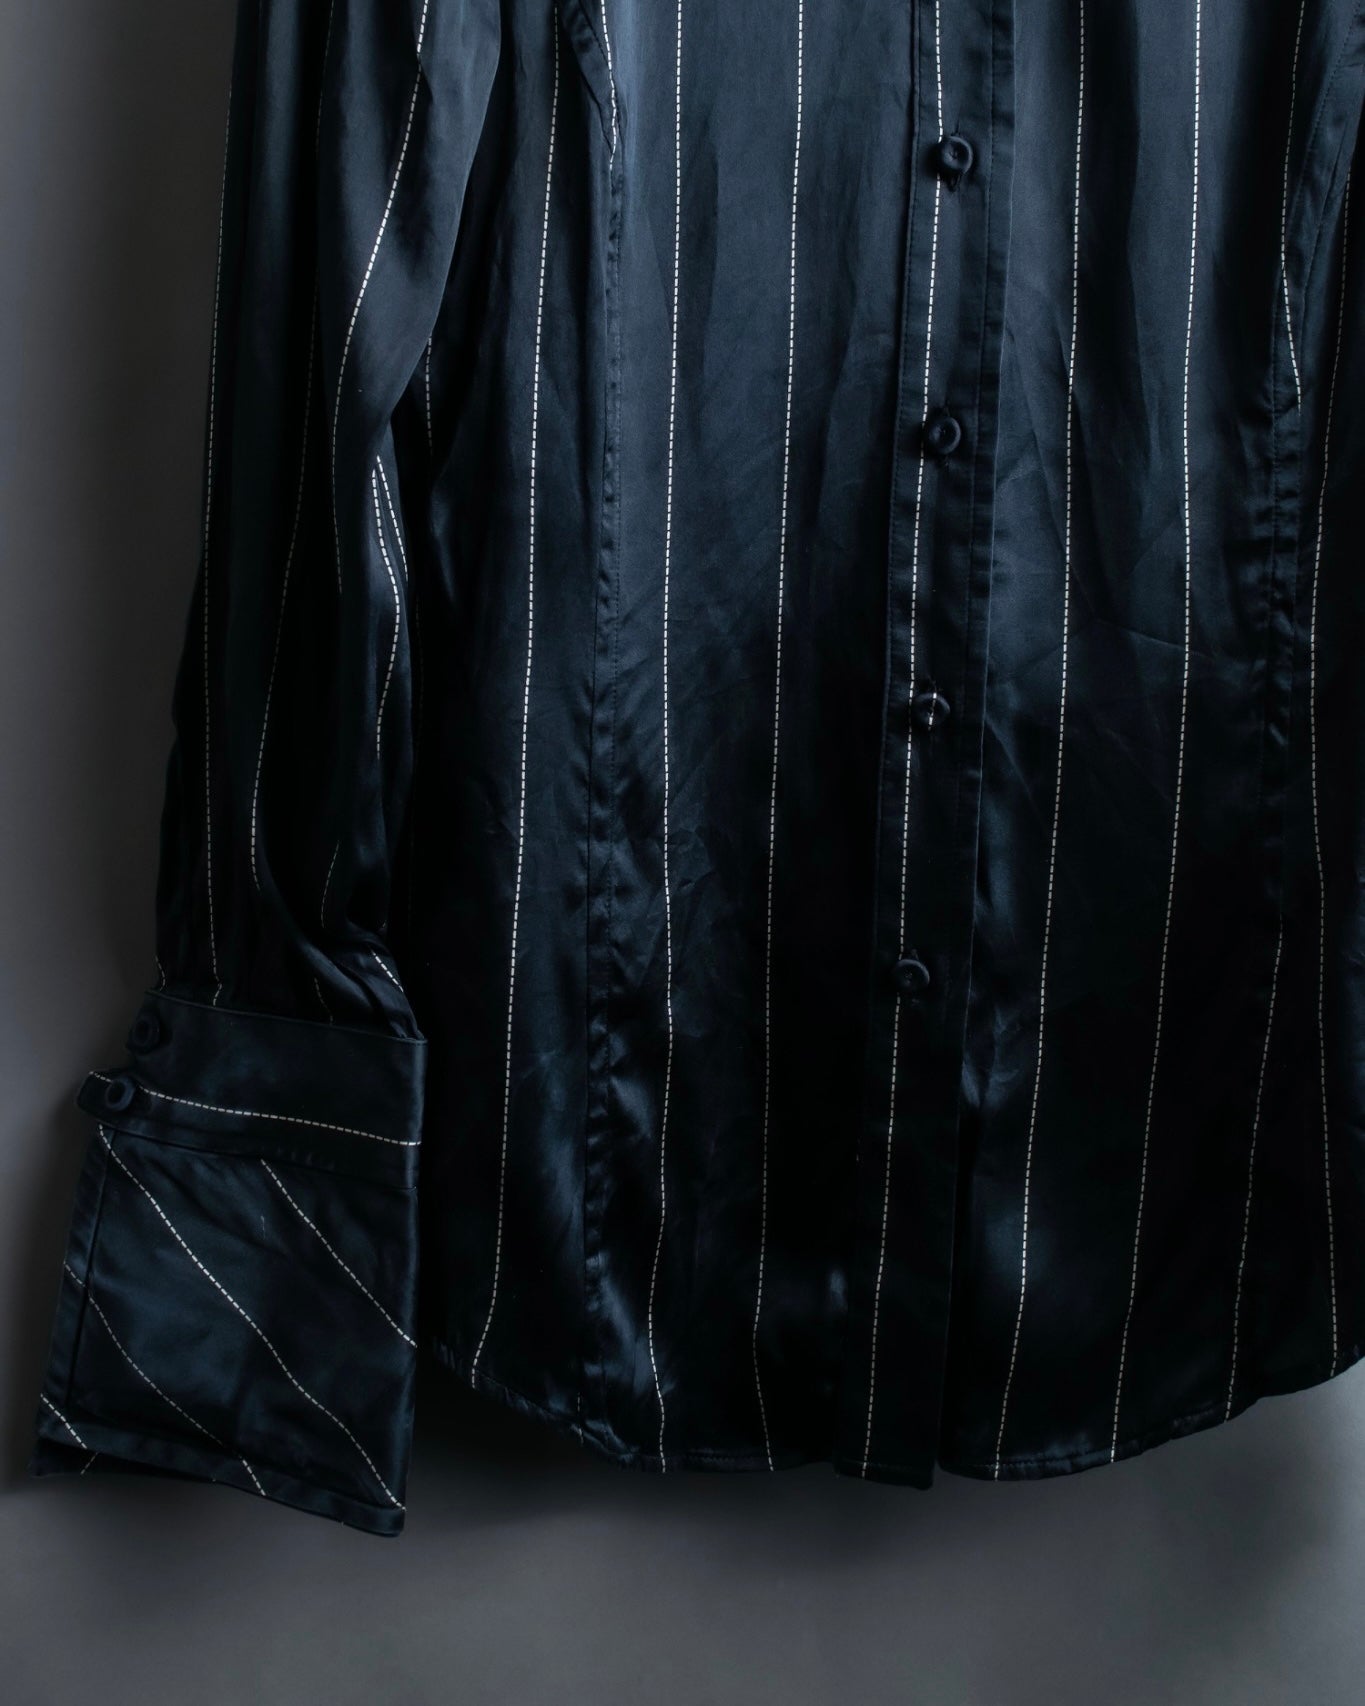 "GIANFRANCO FERRE" 100% silk striped dress shirt